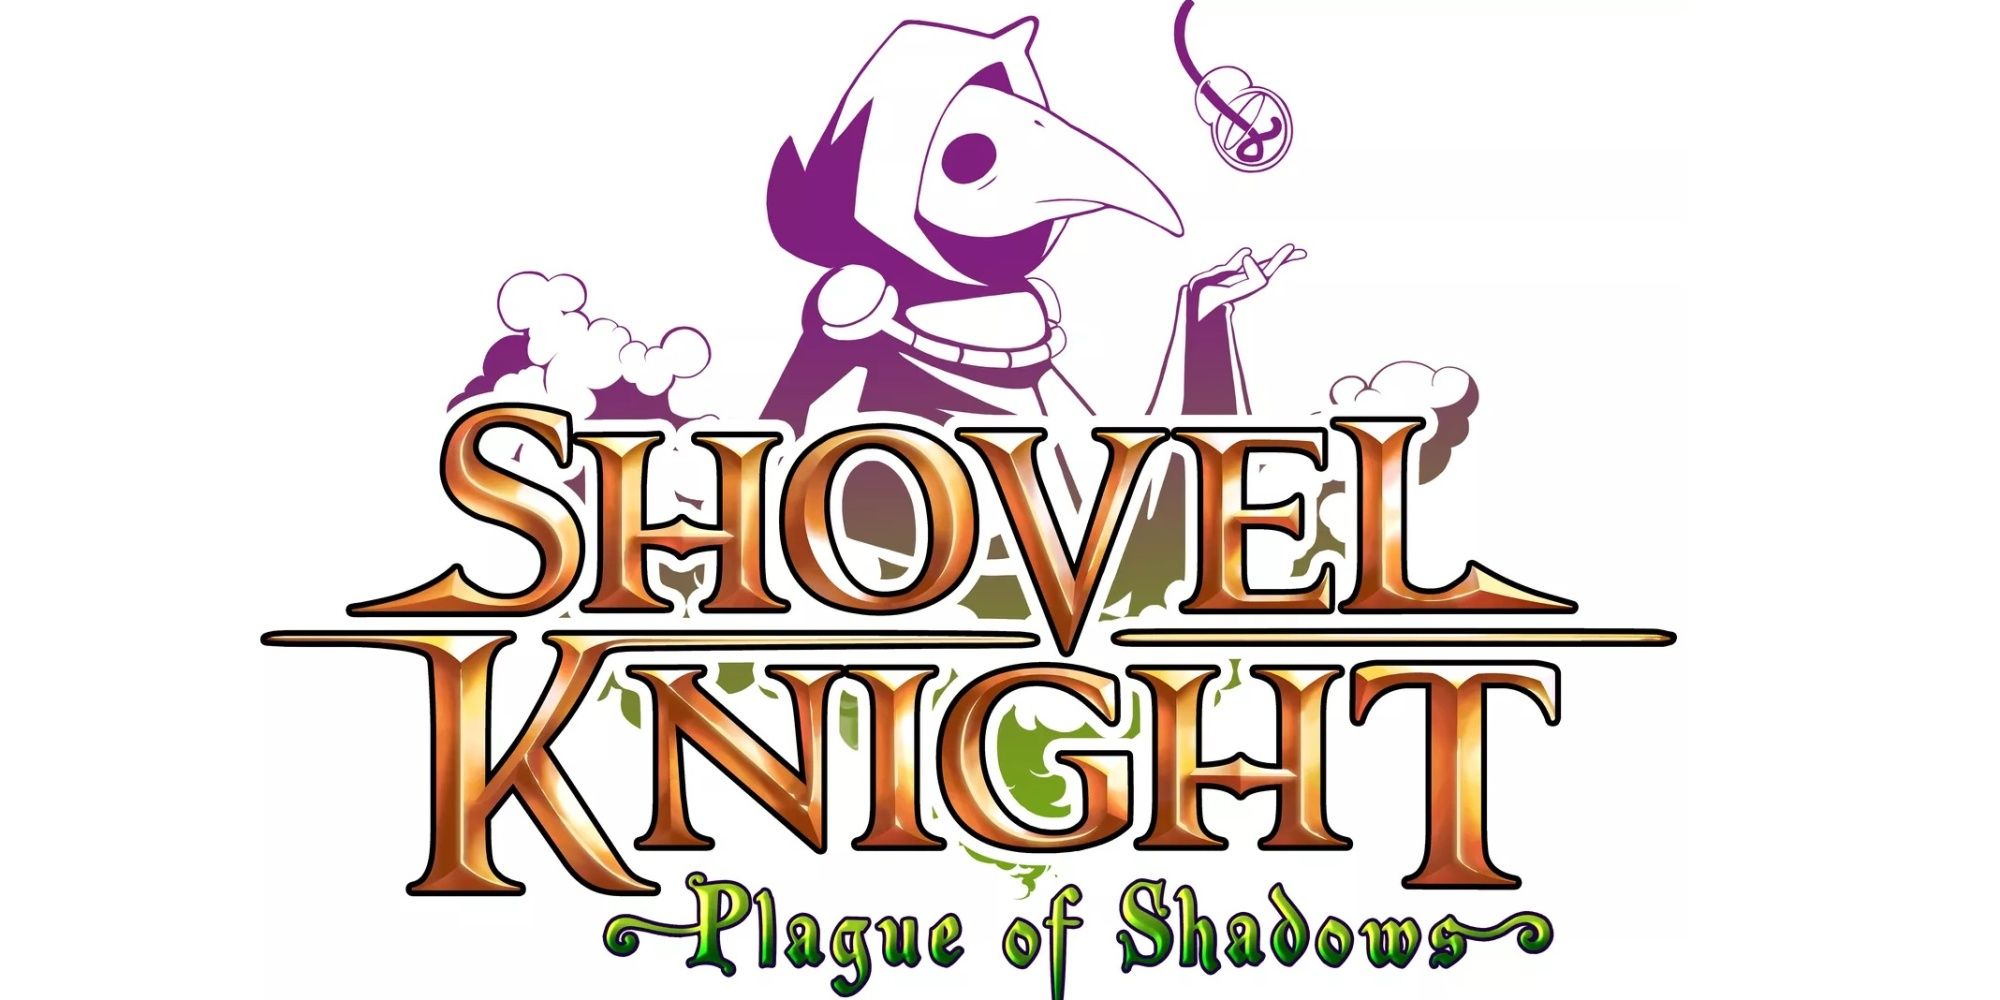 Il logo di Shovel Knight Plague of Shadows